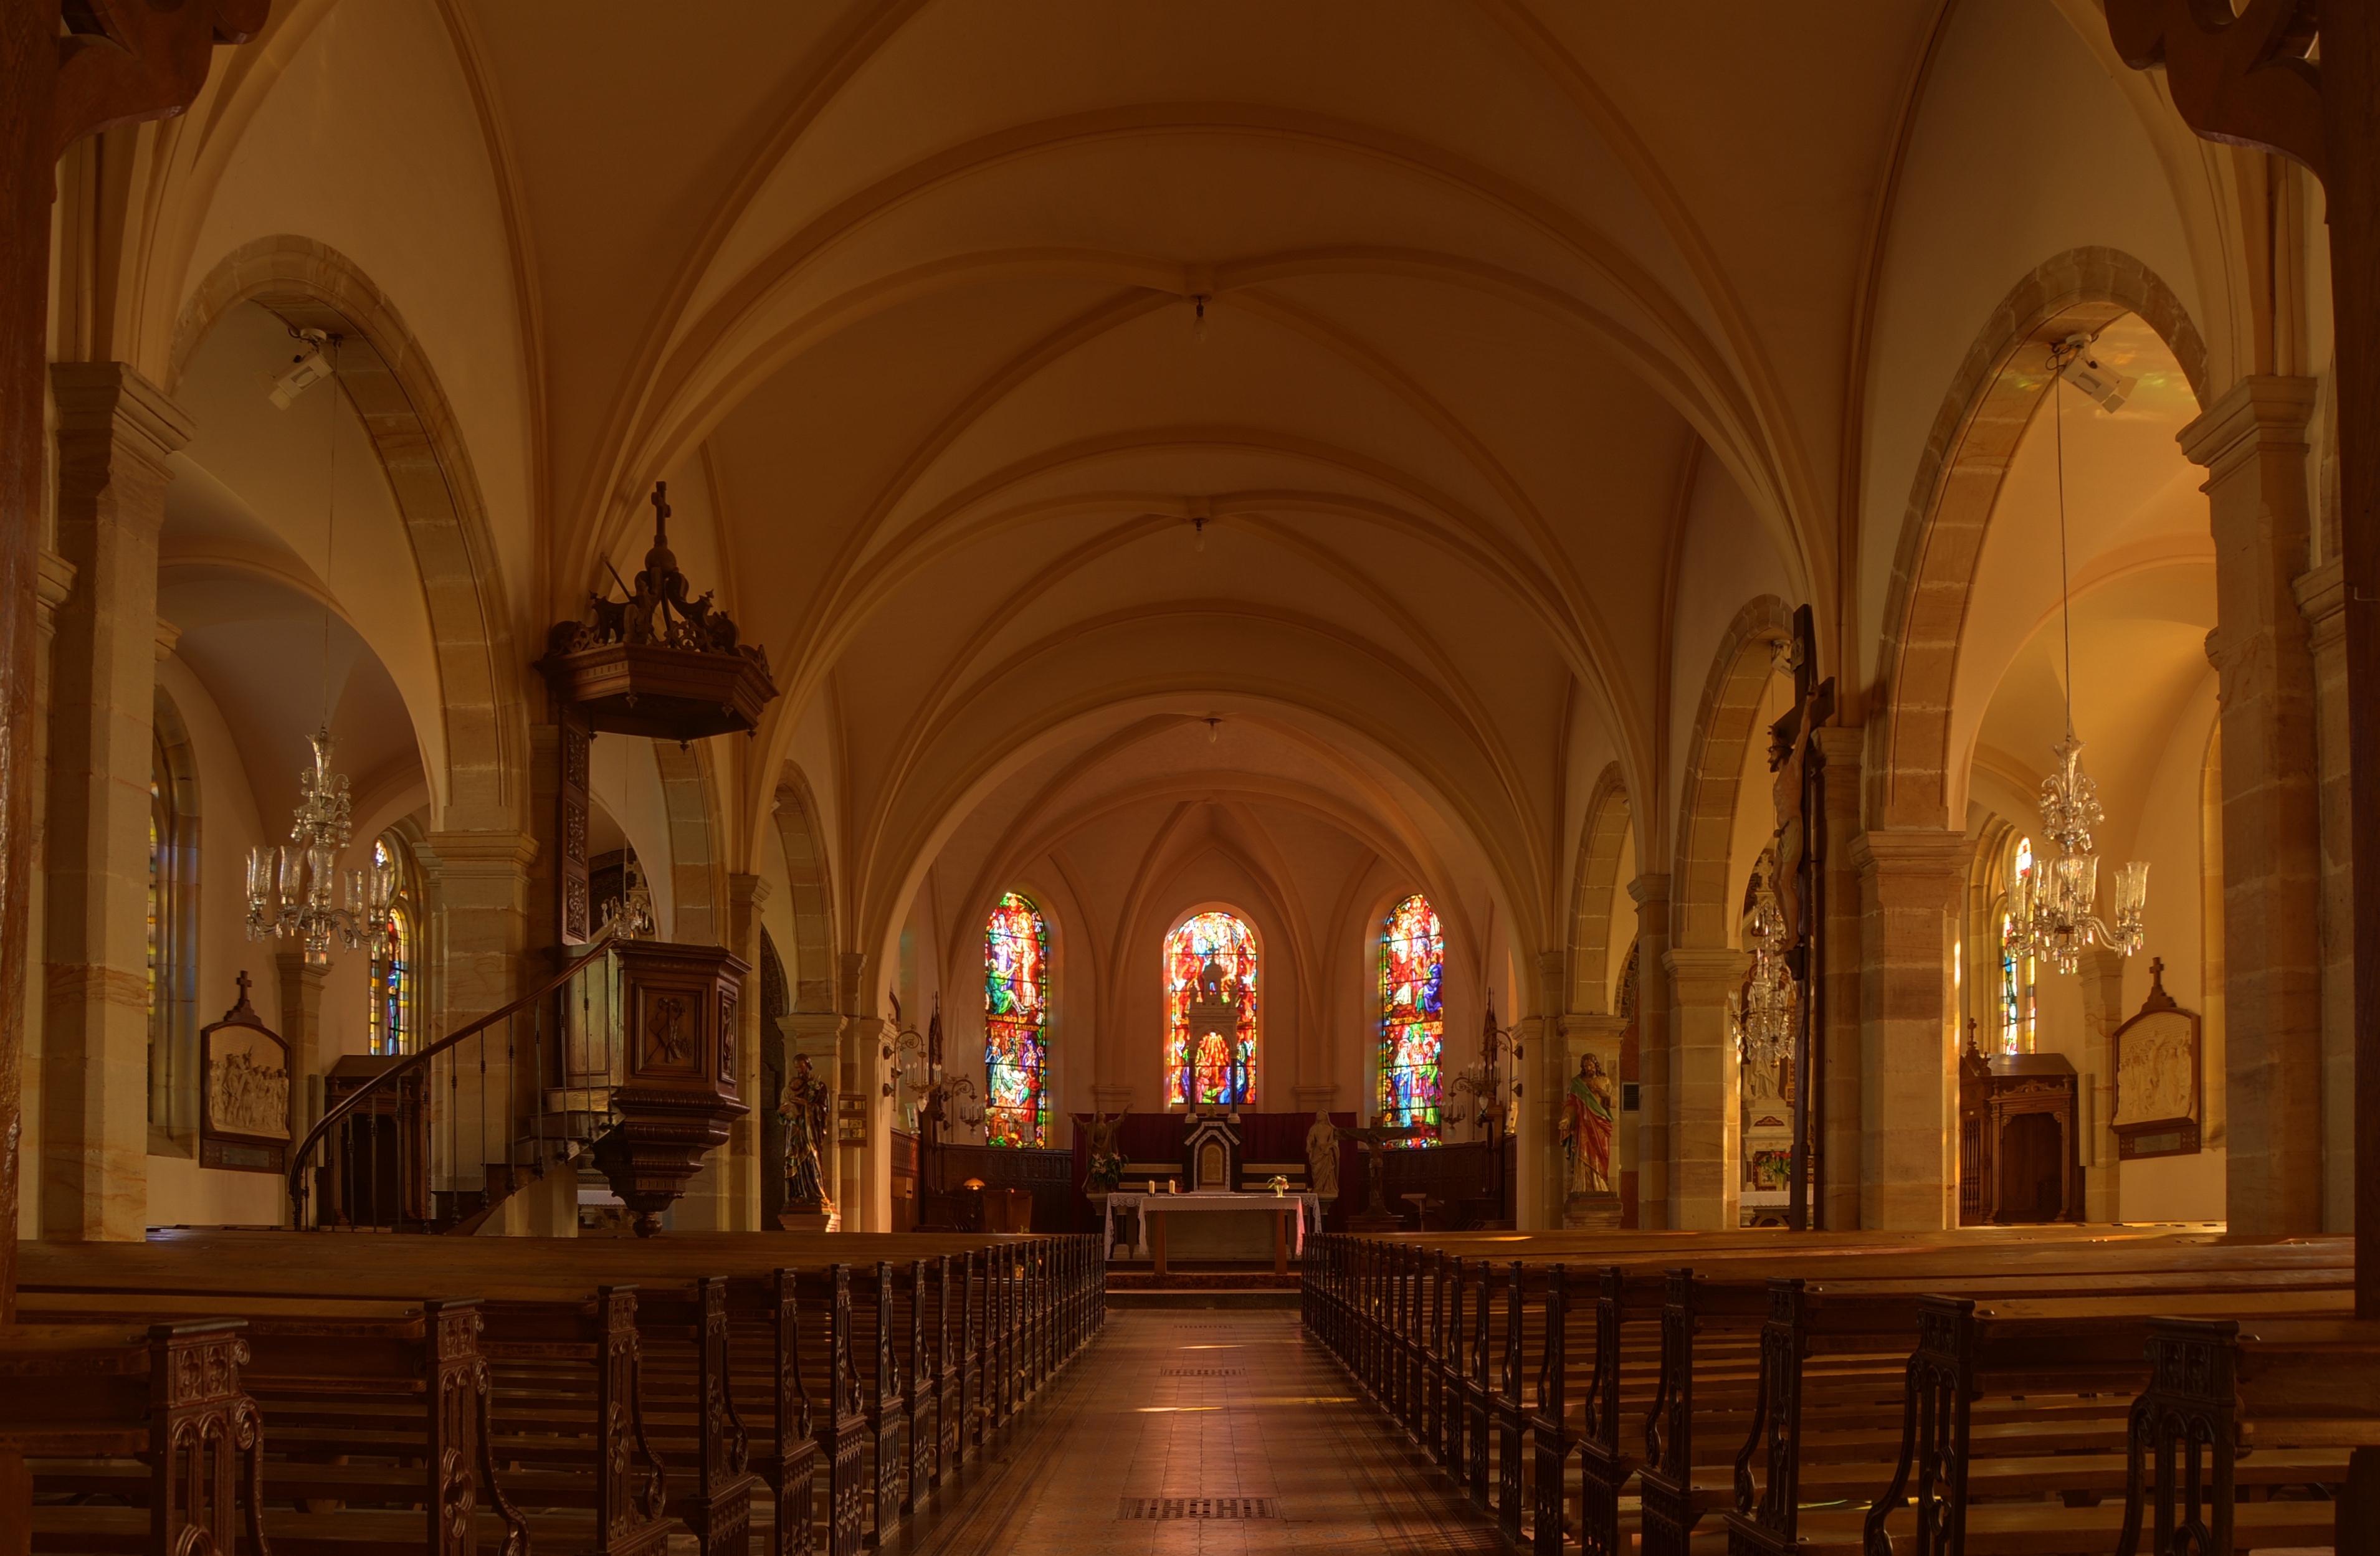 ComputerHotline - Granges-sur-Vologne church (by)